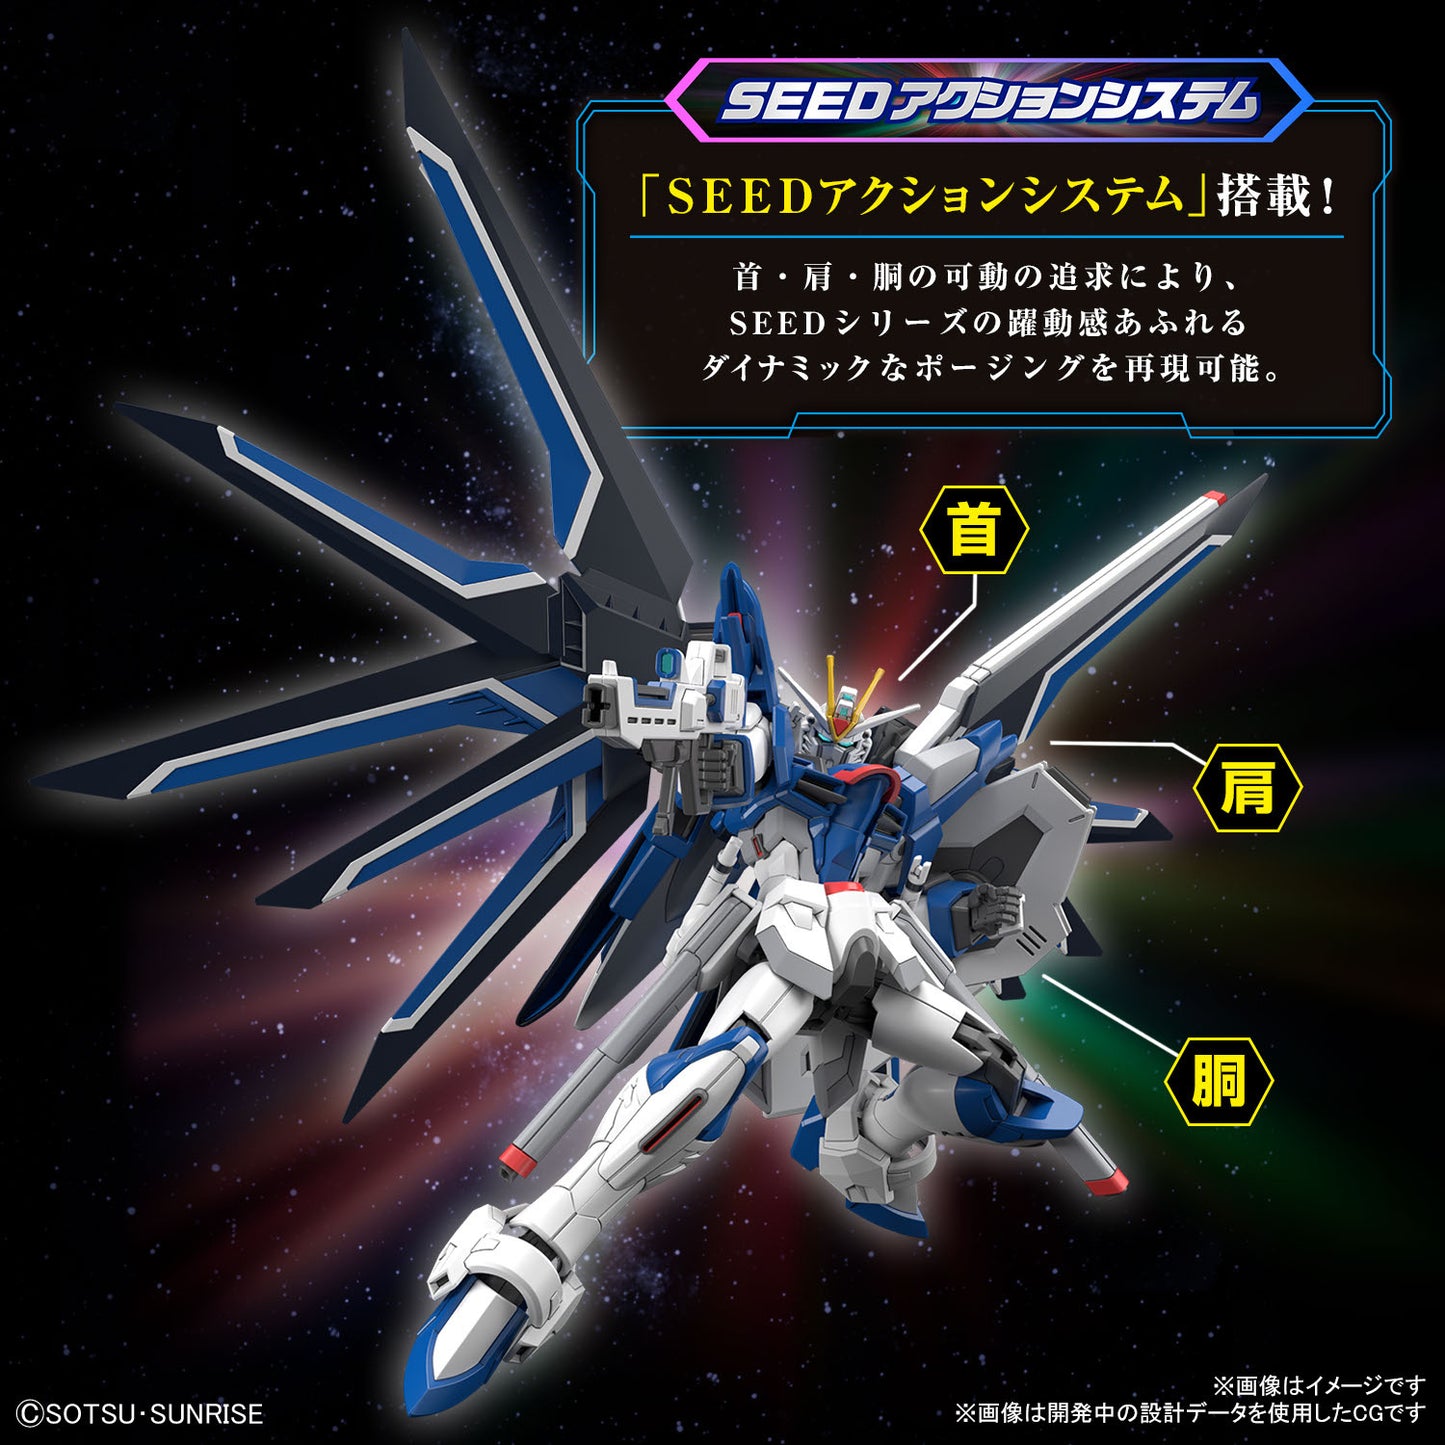 HG 1/144 Rising Freedom Gundam (Mobile Suit Gundam: Seed Freedom)